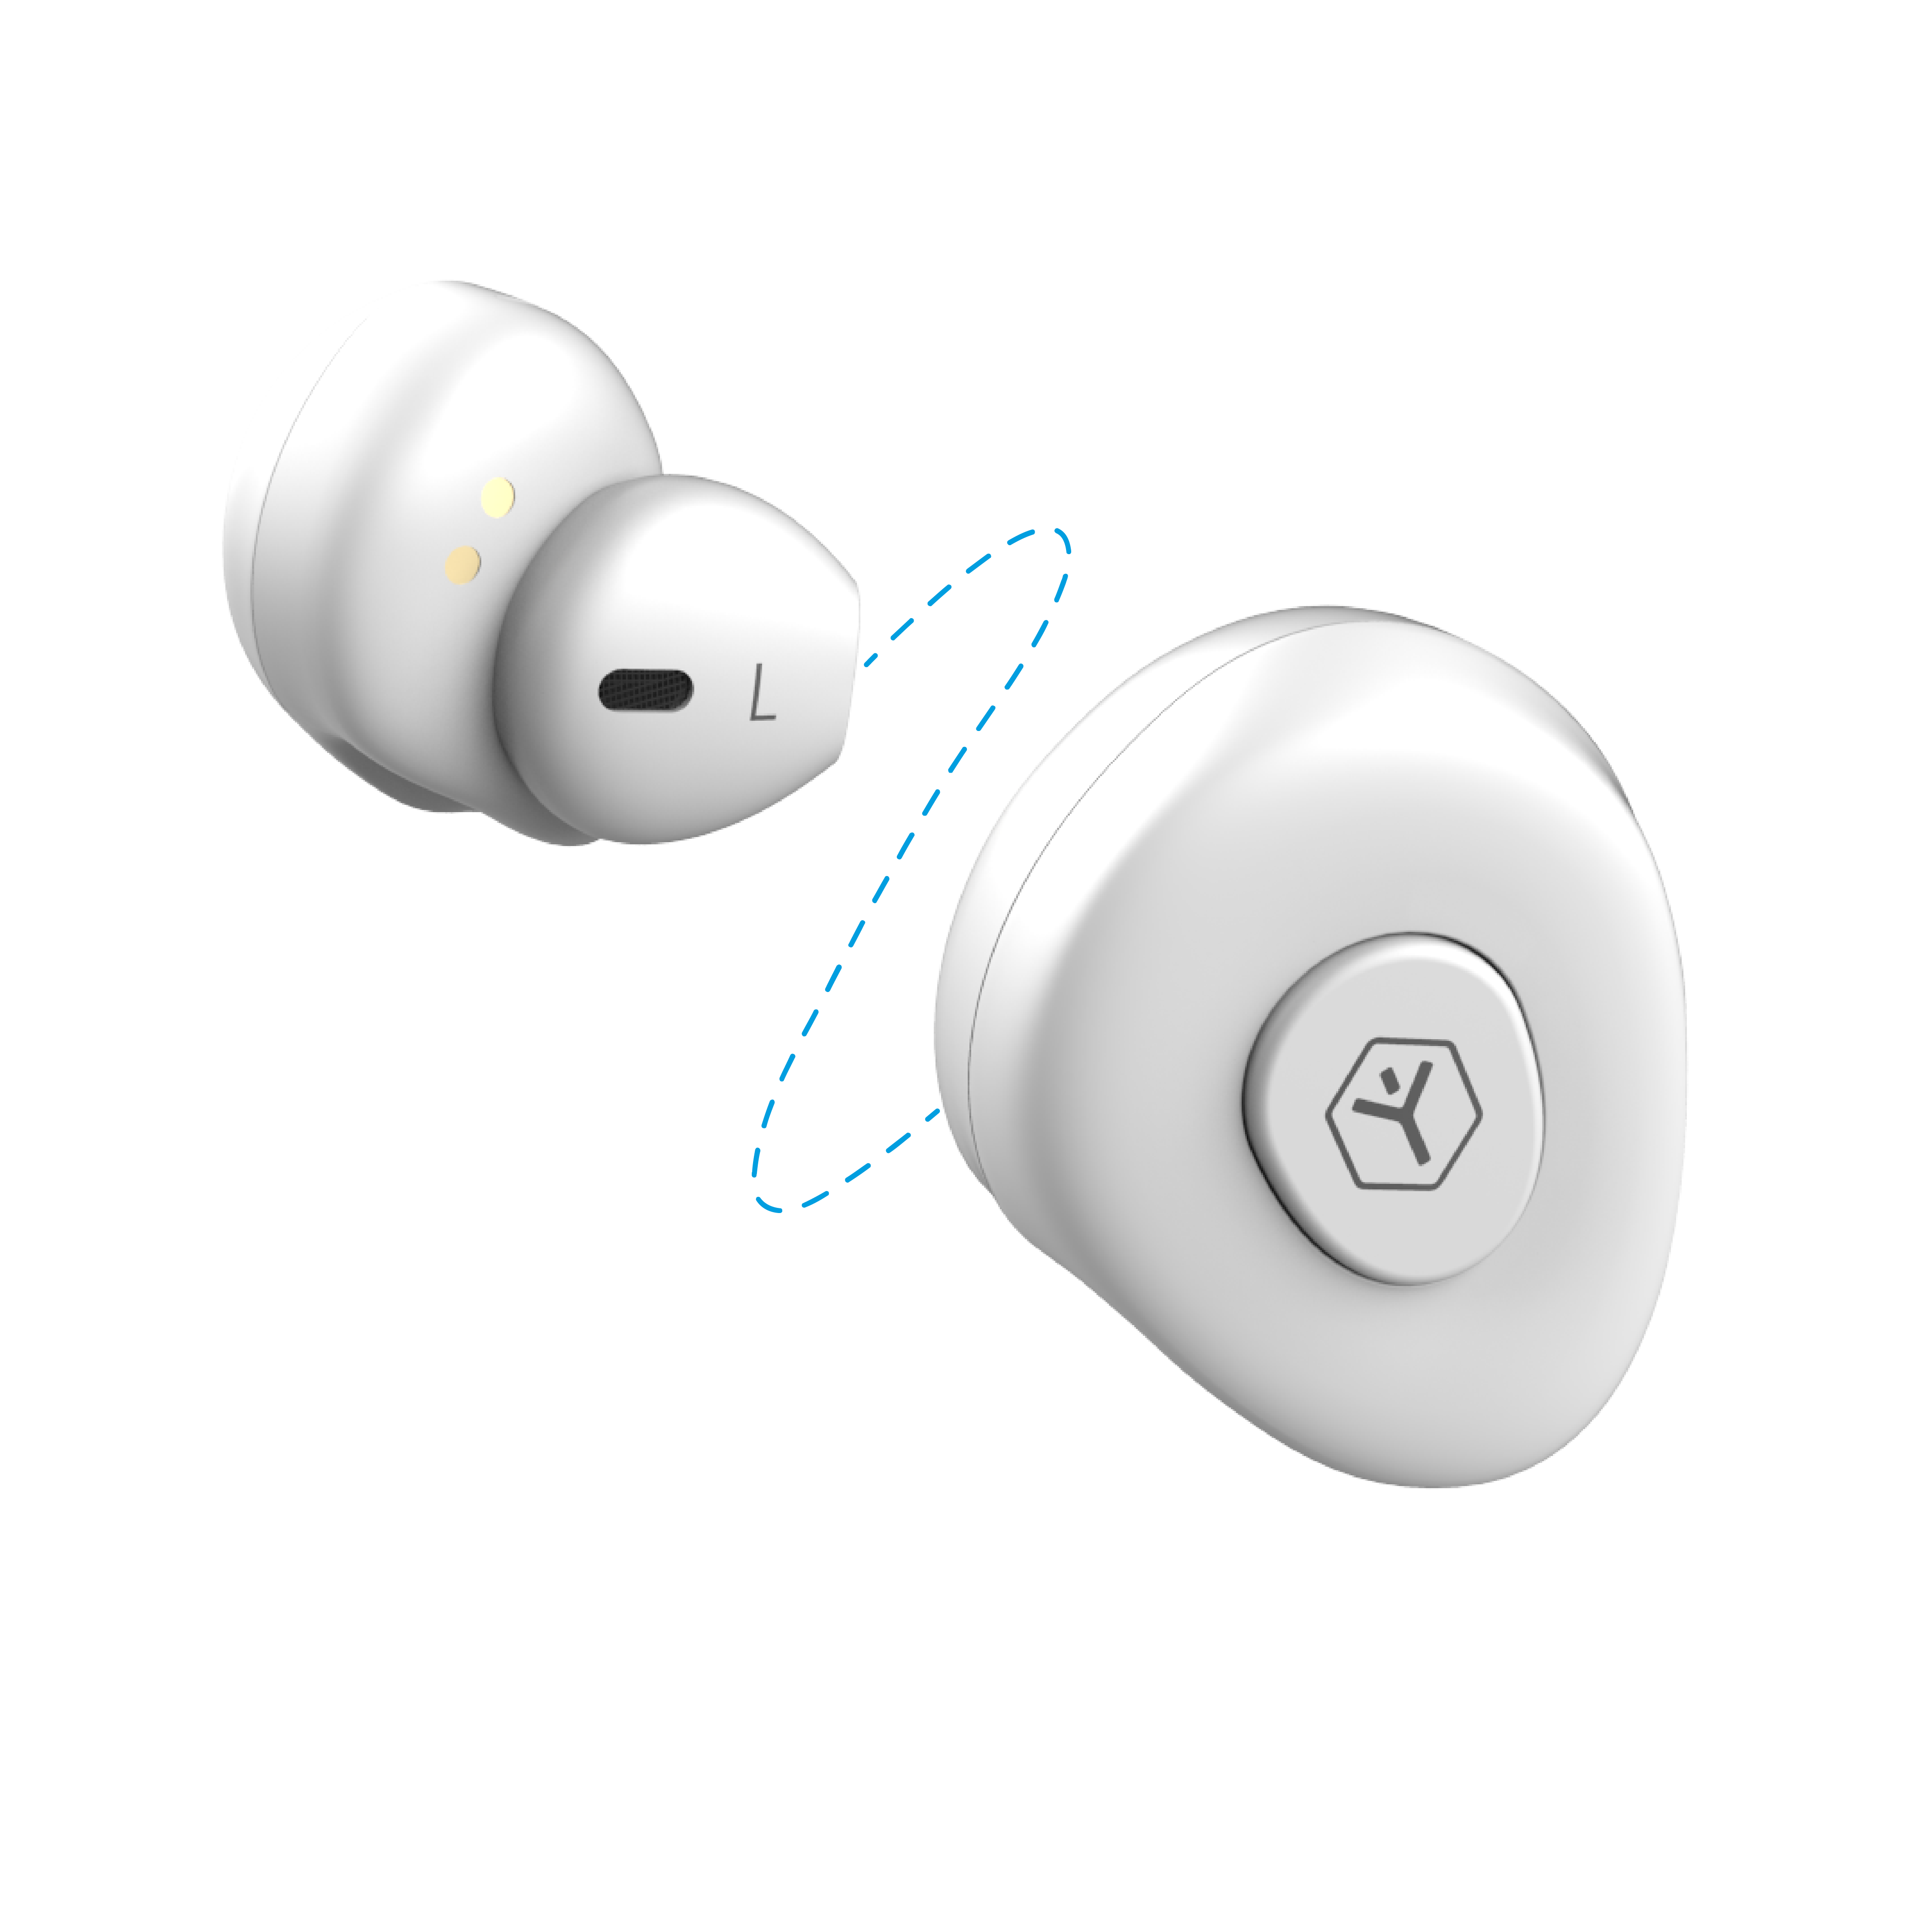 Bluetooth earbuds